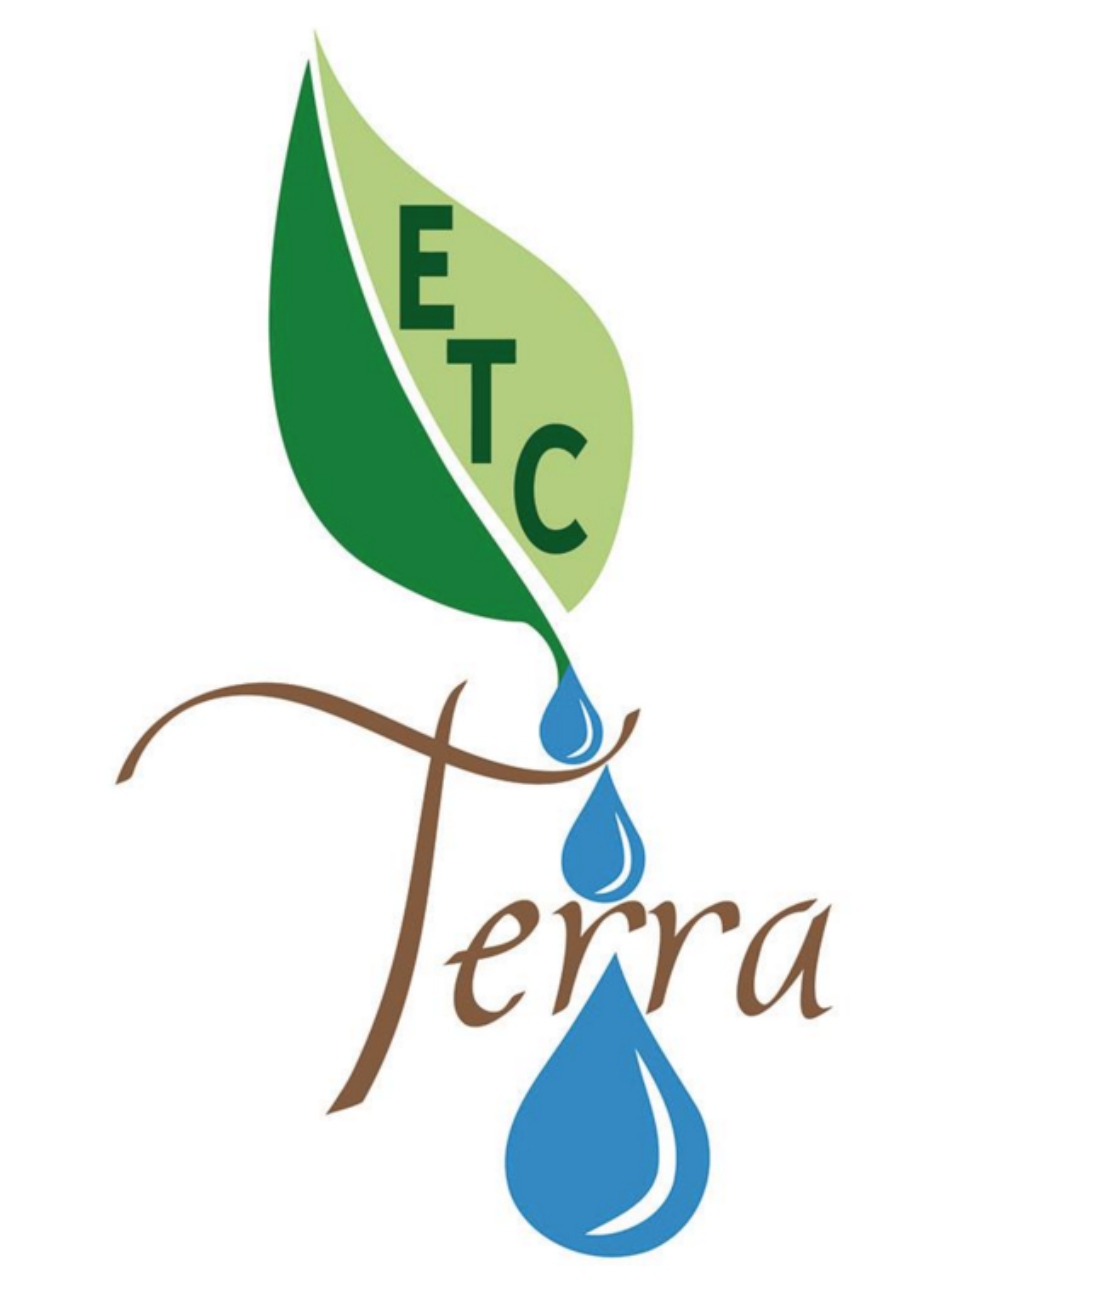 Association ETC Terra